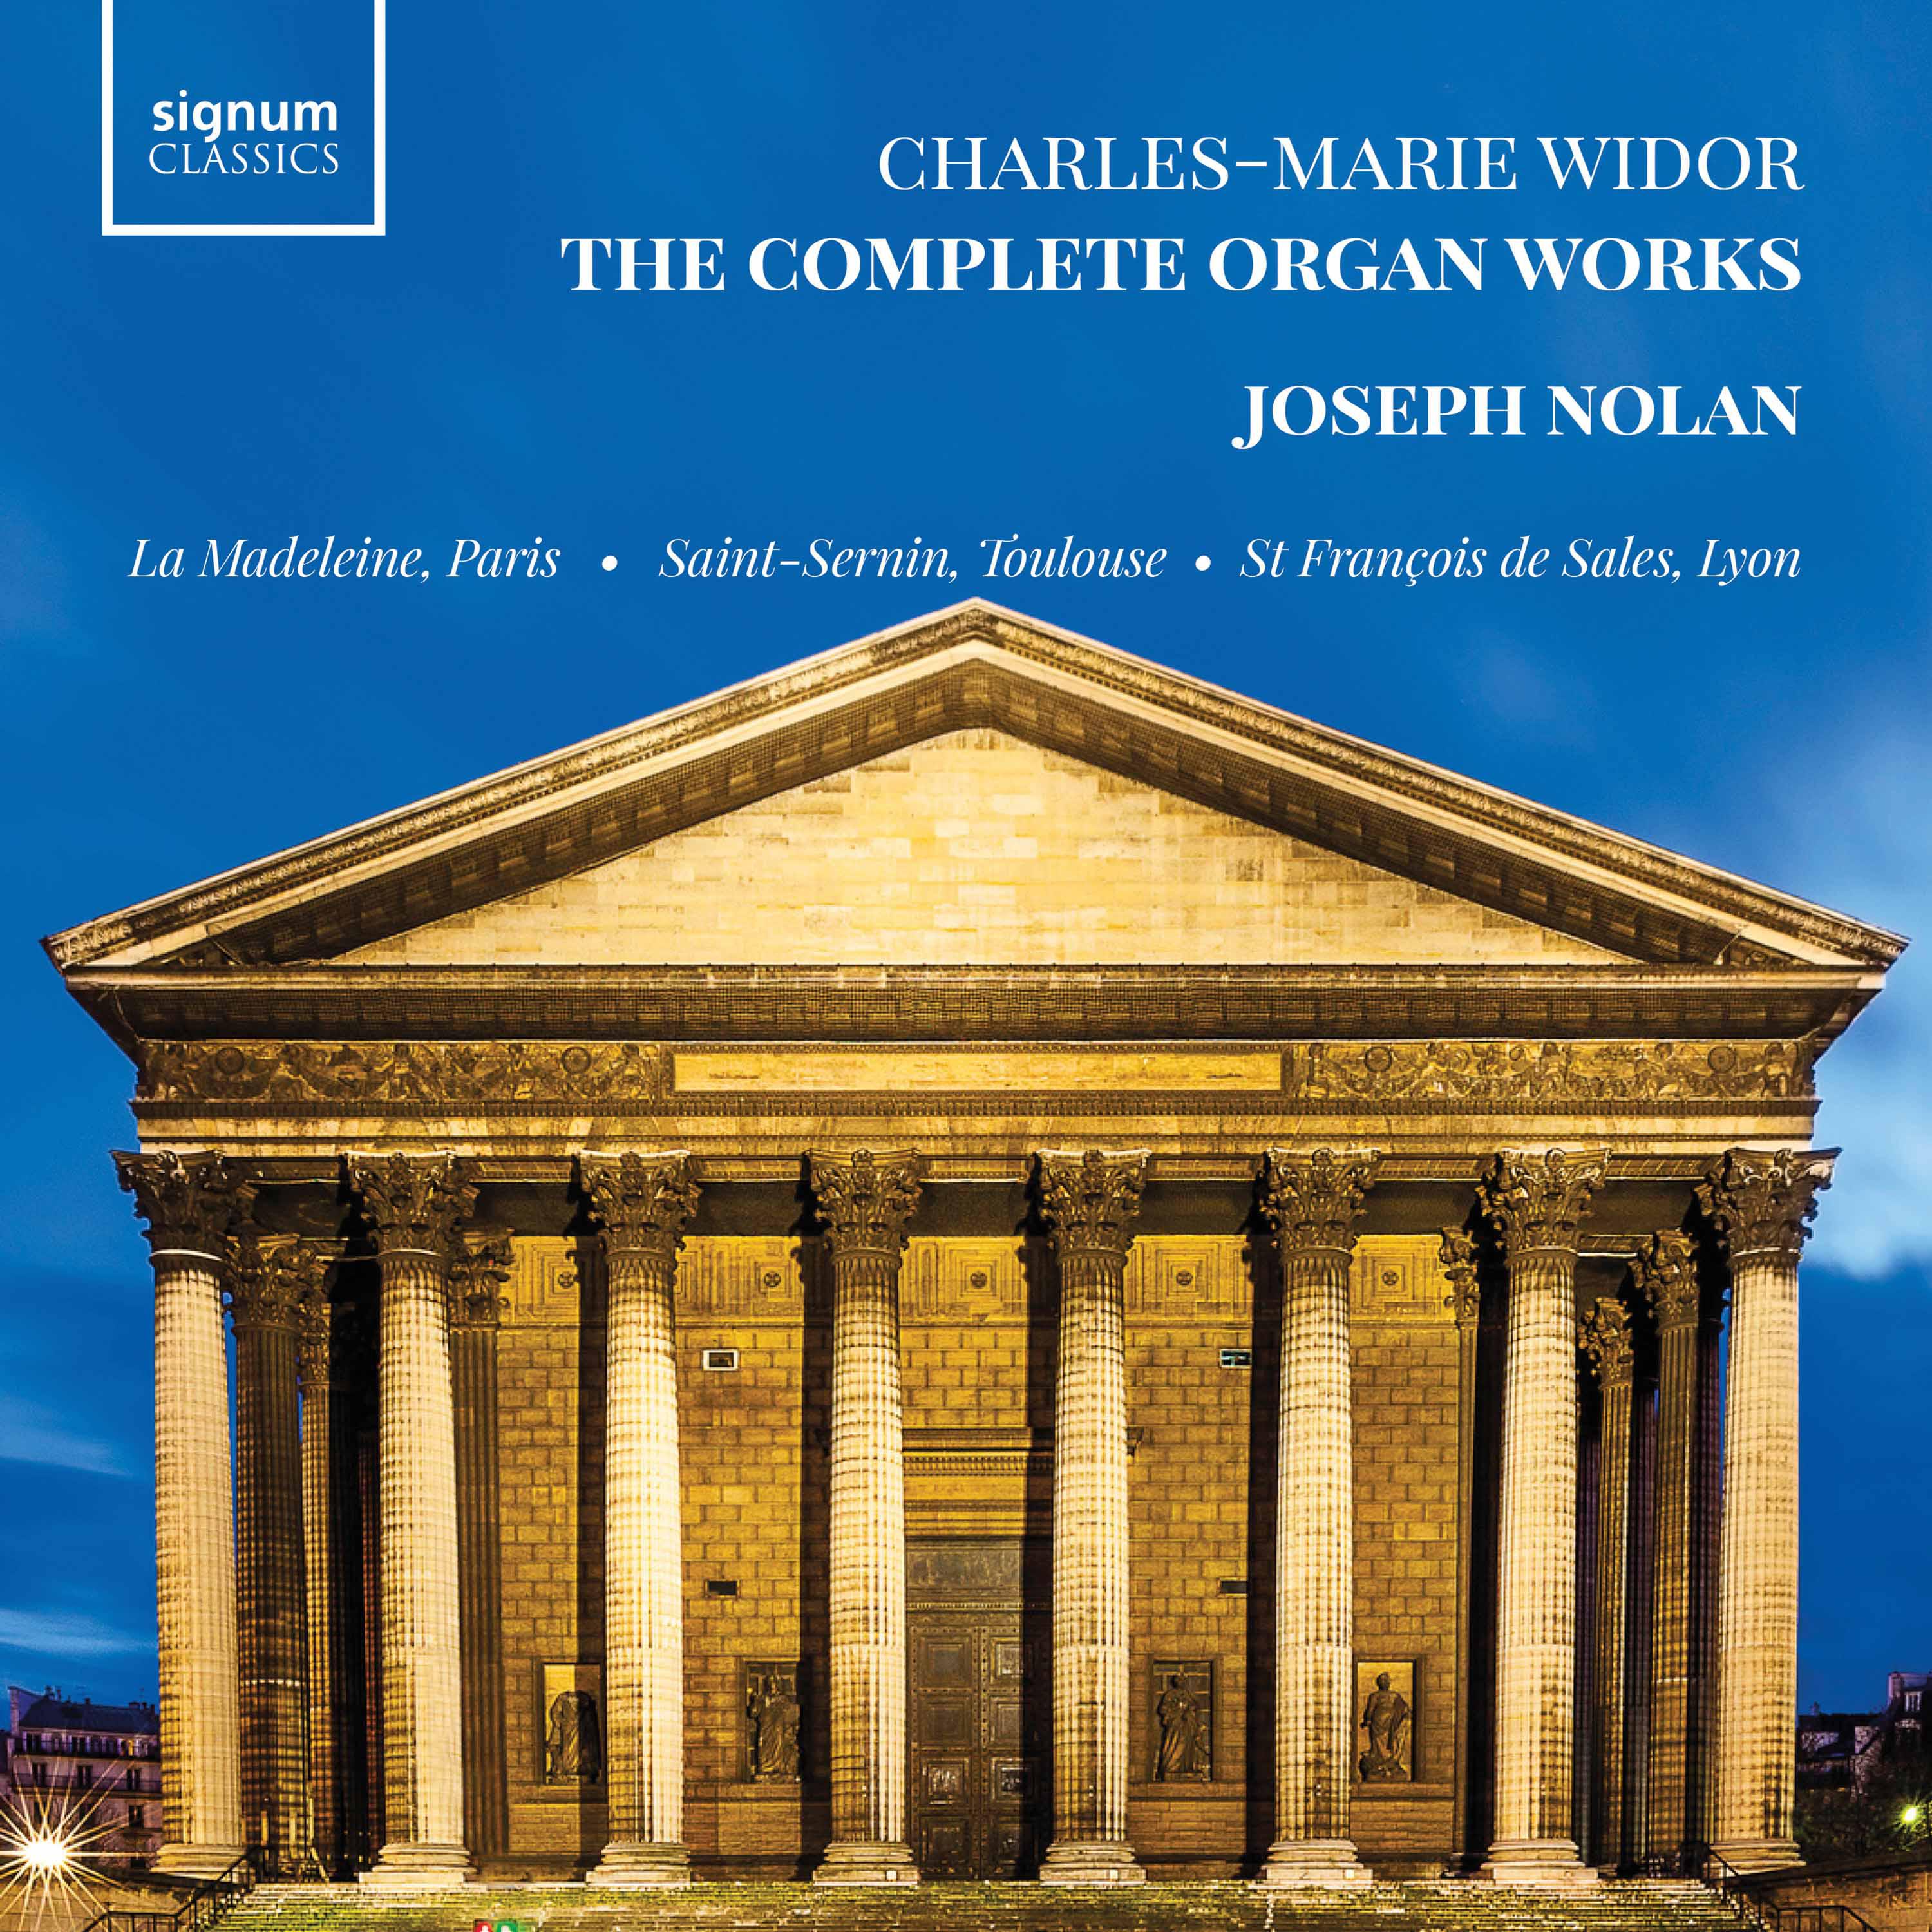 Joseph Nolan - Symphonie romane, Op. 73:I. Moderato